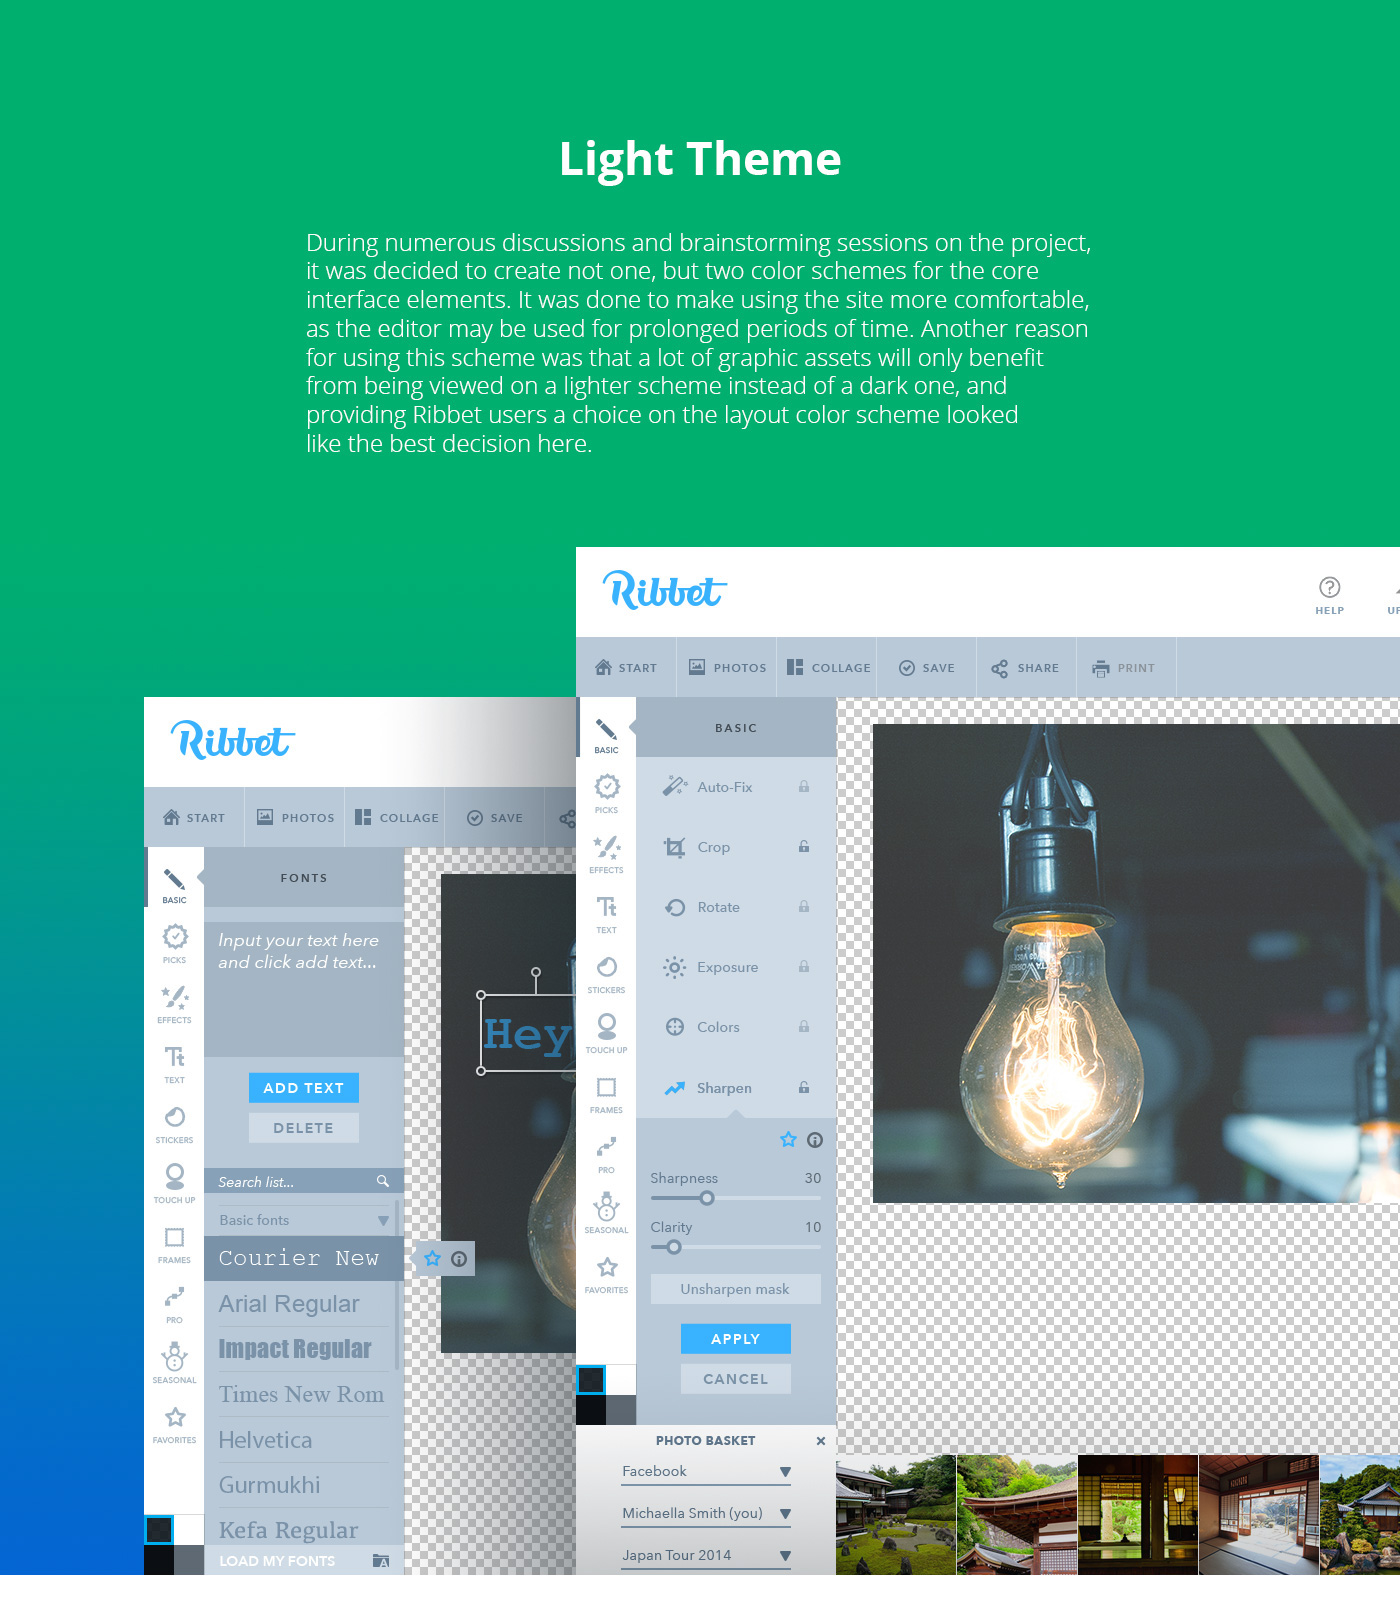 Tubik Studio, talentueux Webdesigner et Designer d’interface #27